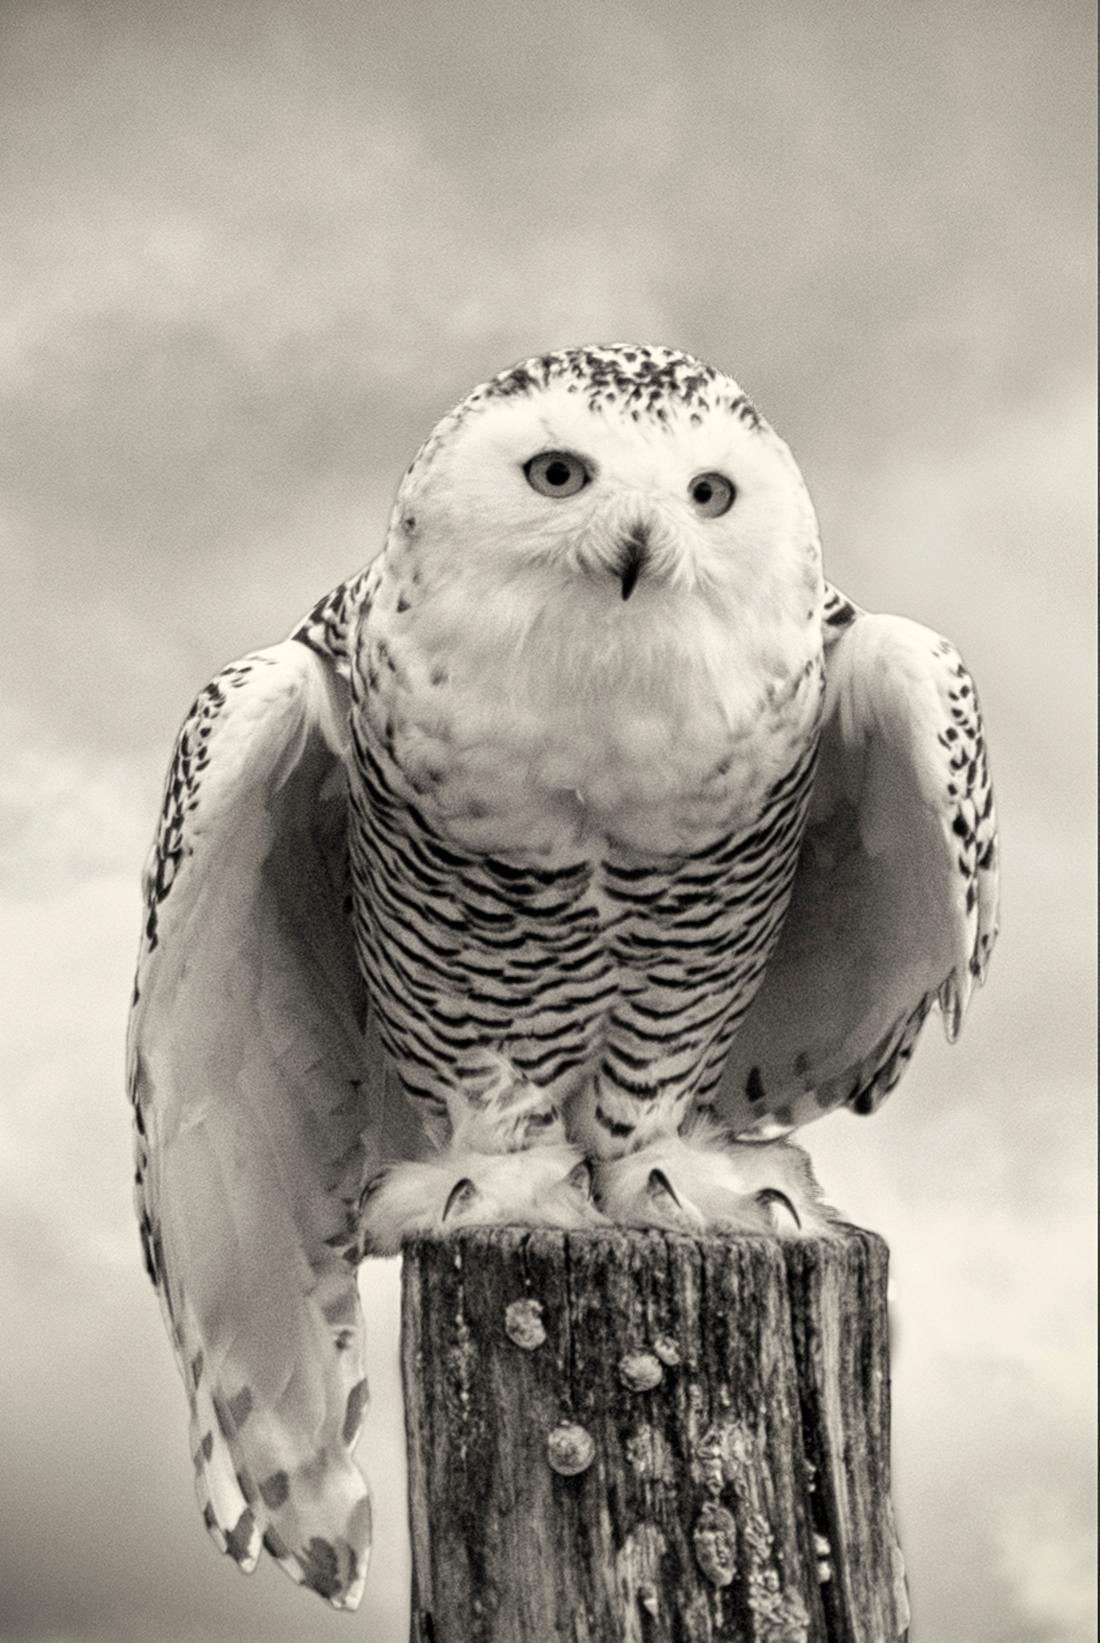 Beth Moon Animal Print - Snowy Owl II, limited edition photograph, signed, Platinum/Palladium Print